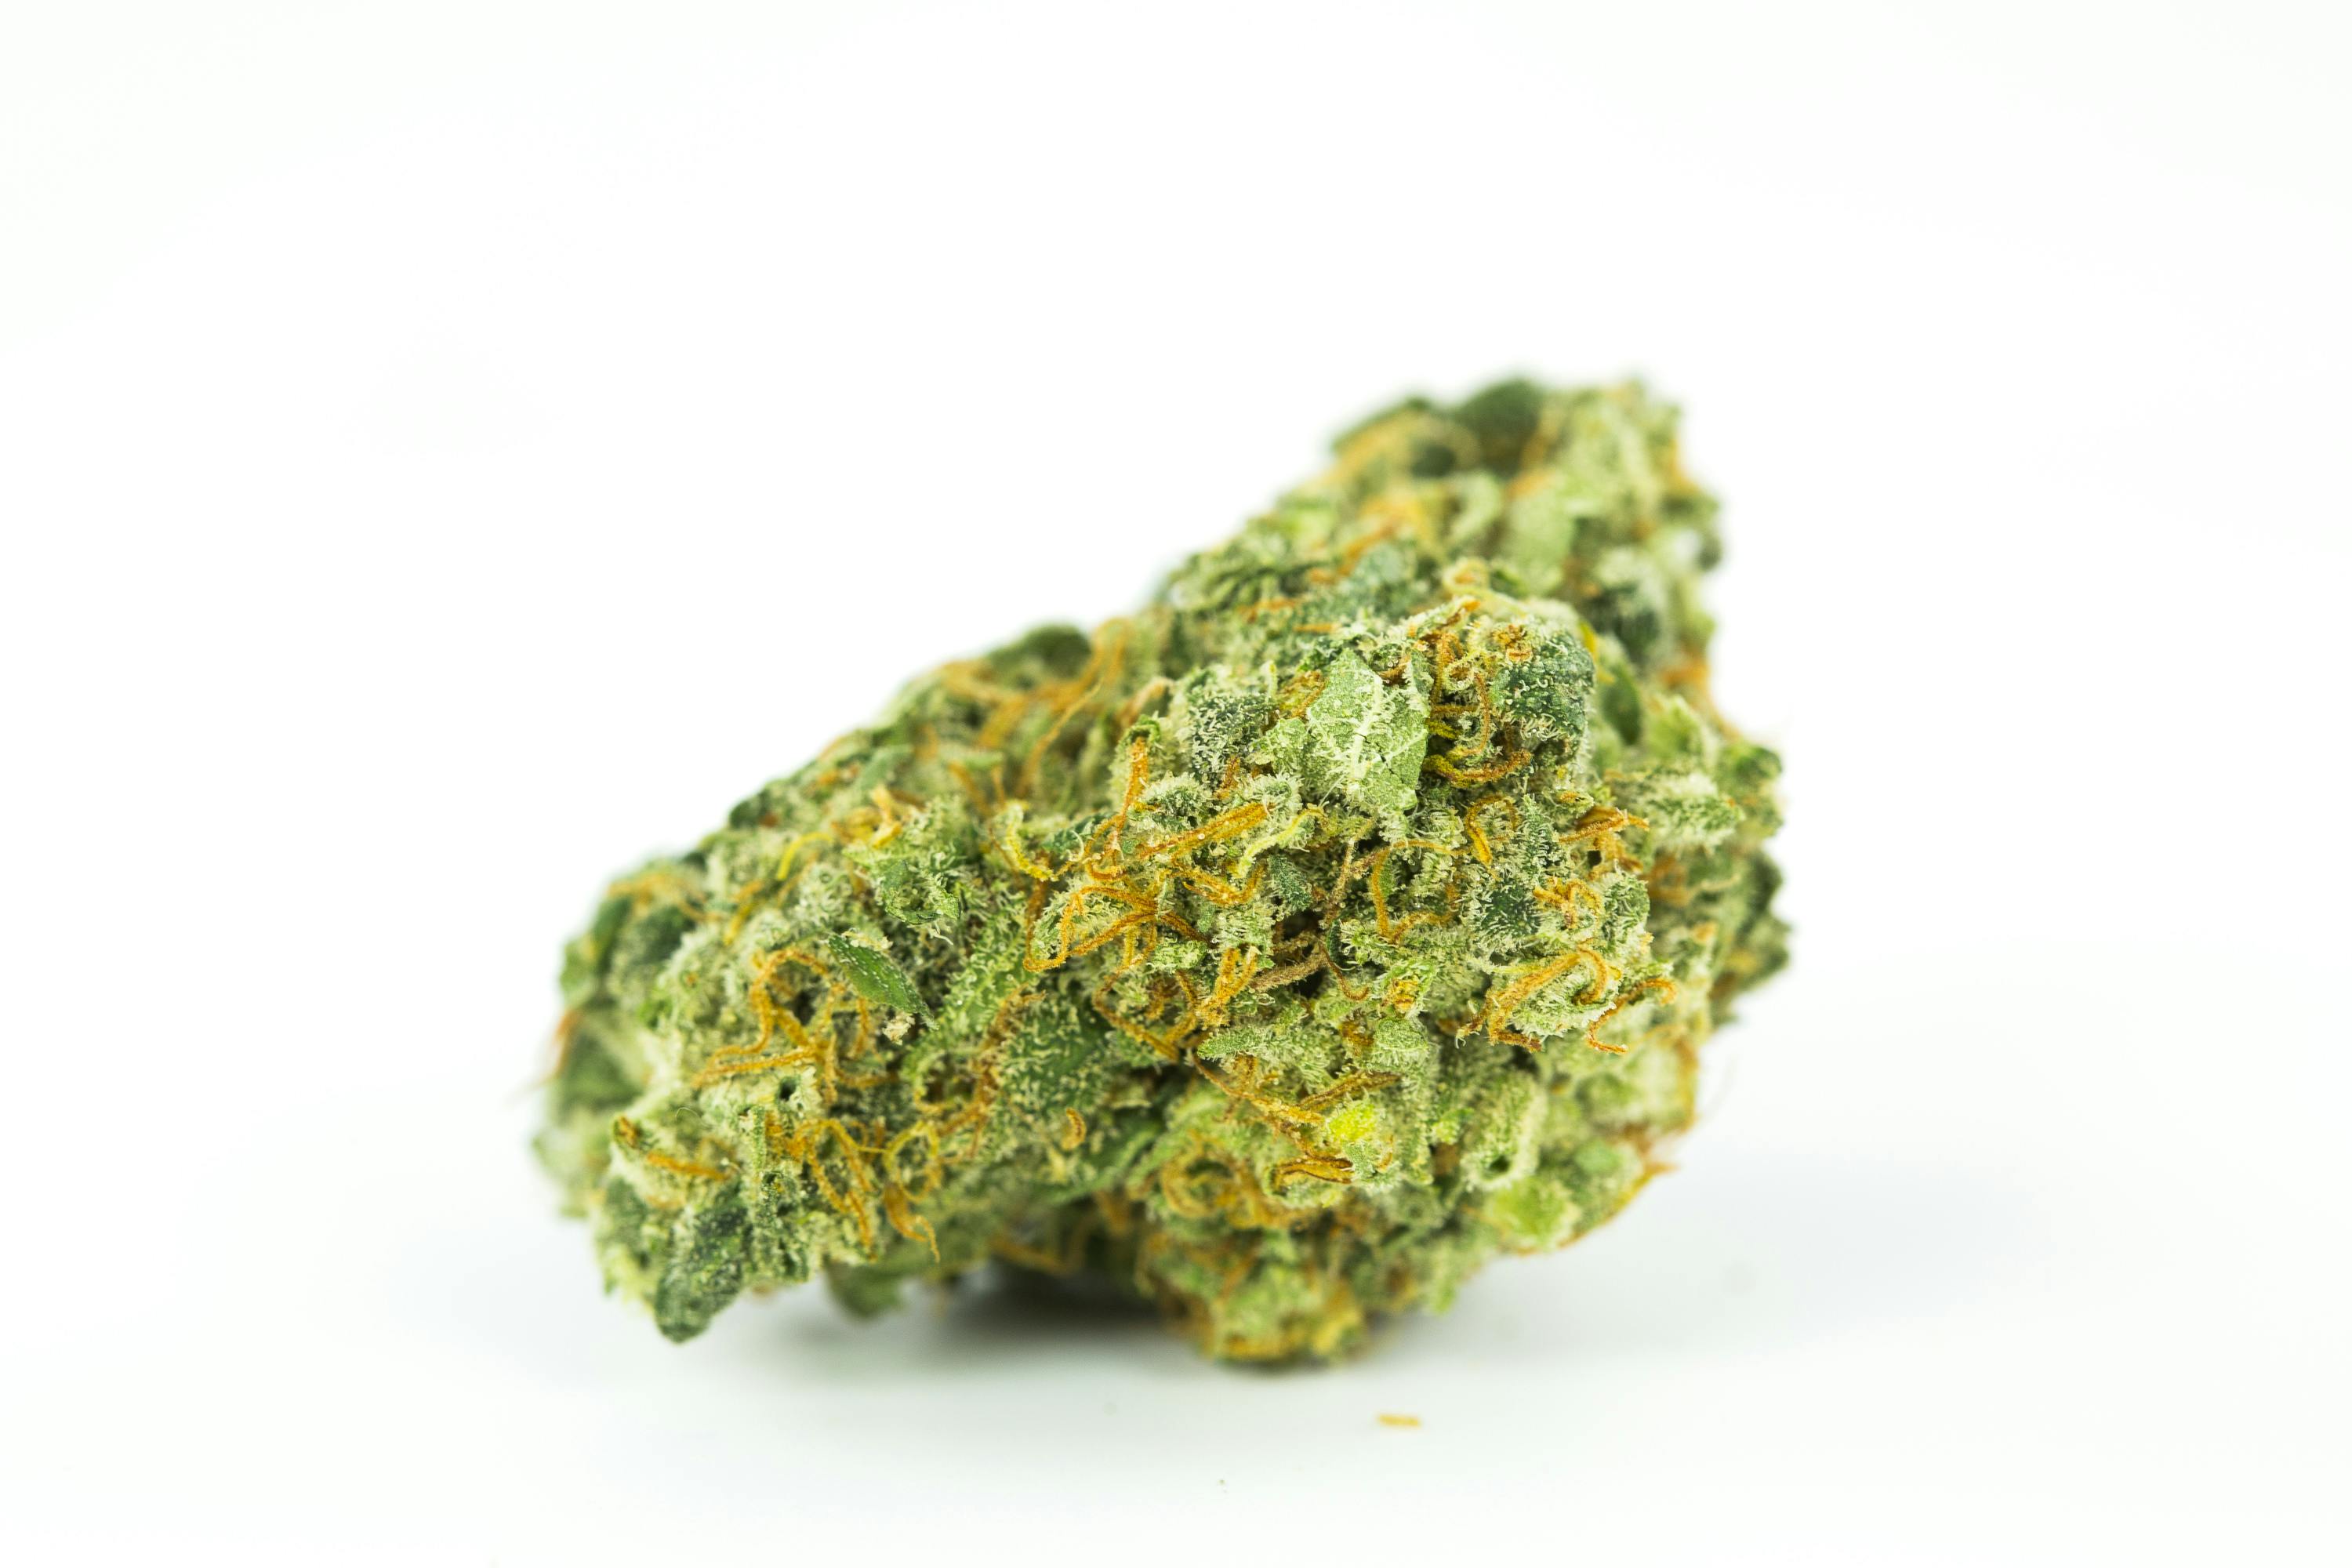 Gorilla Glue #4 Weed; Gorilla Glue Cannabis Strain; Gorilla Glue #4 Hybrid Marijuana Strain